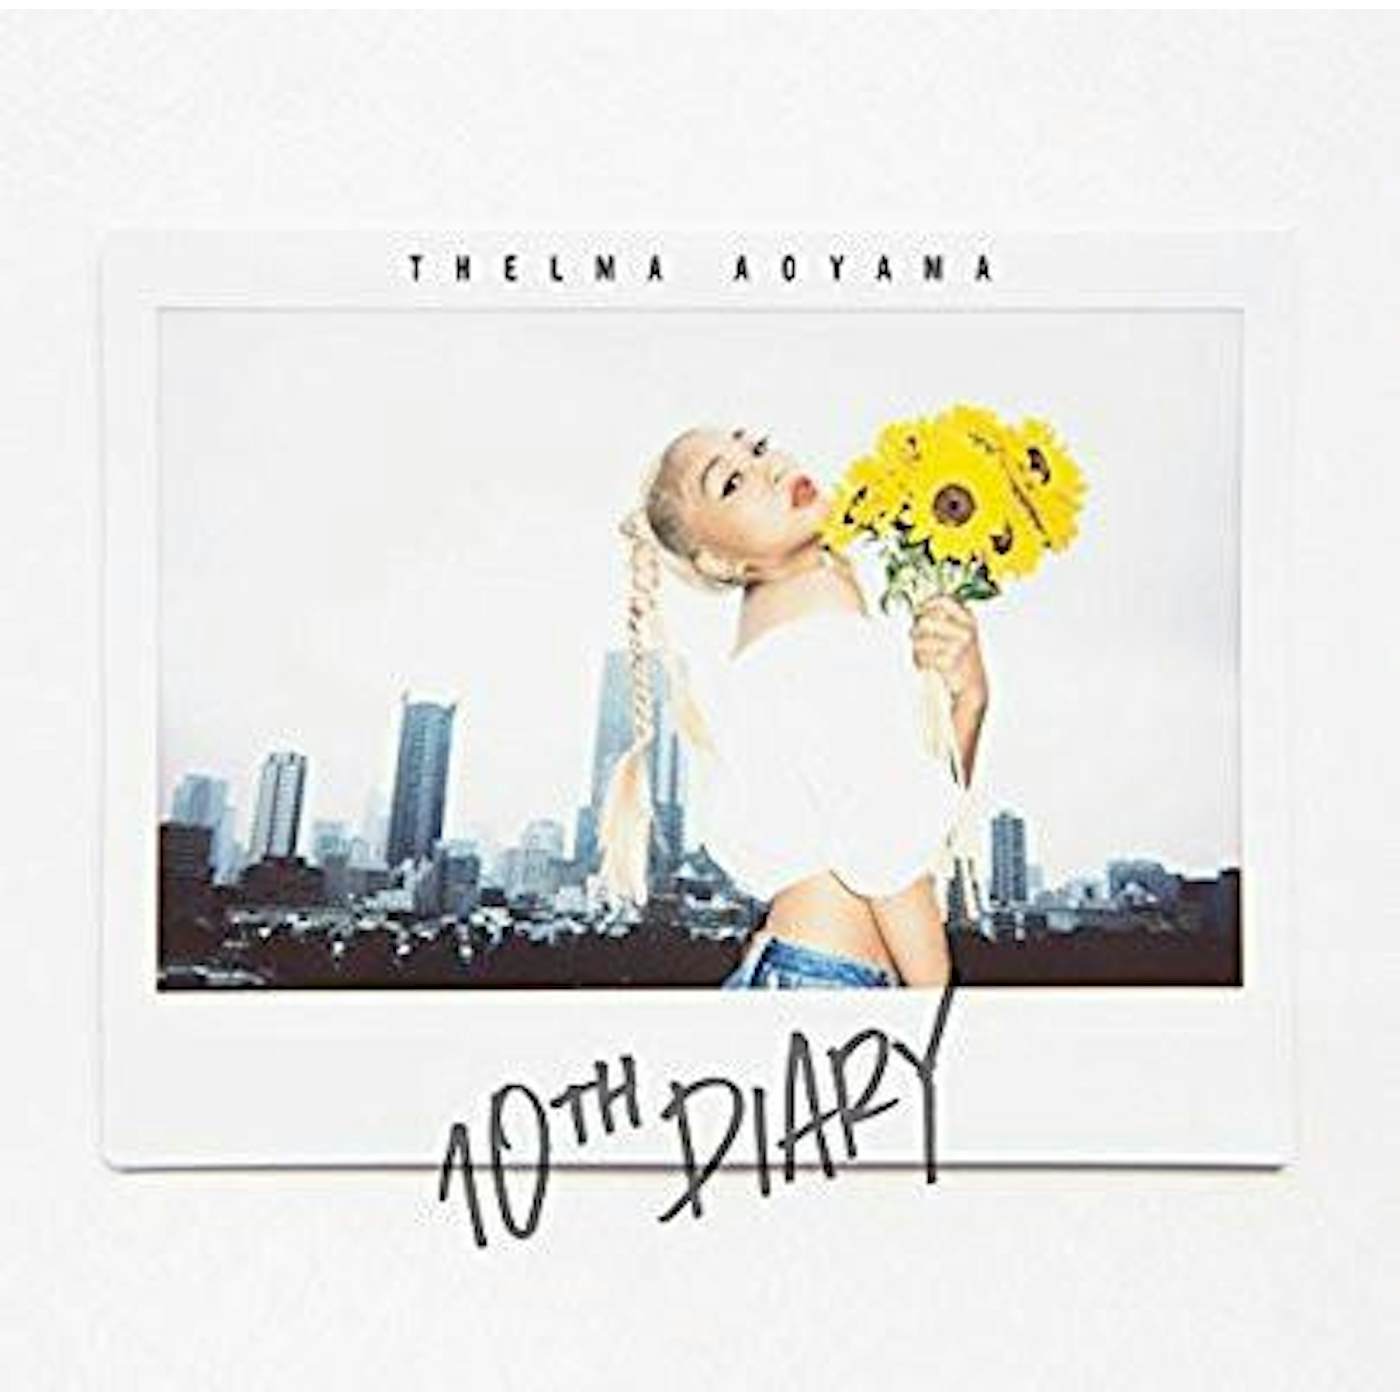 Thelma Aoyama 10TH DIARY (LIMITED) CD